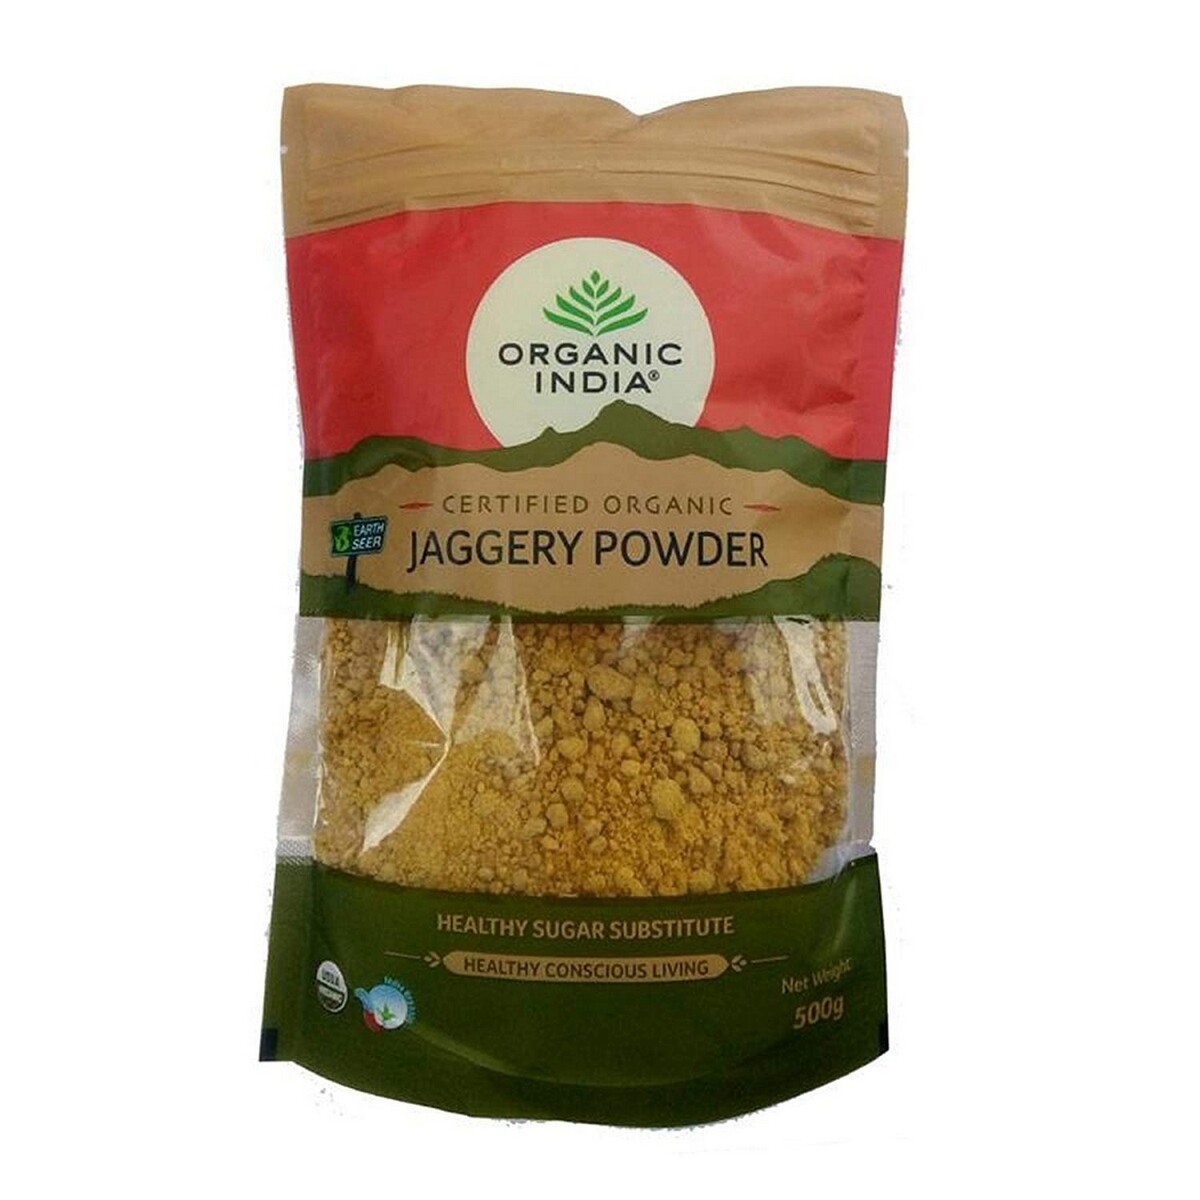 Organic India Jaggery Powder 500g